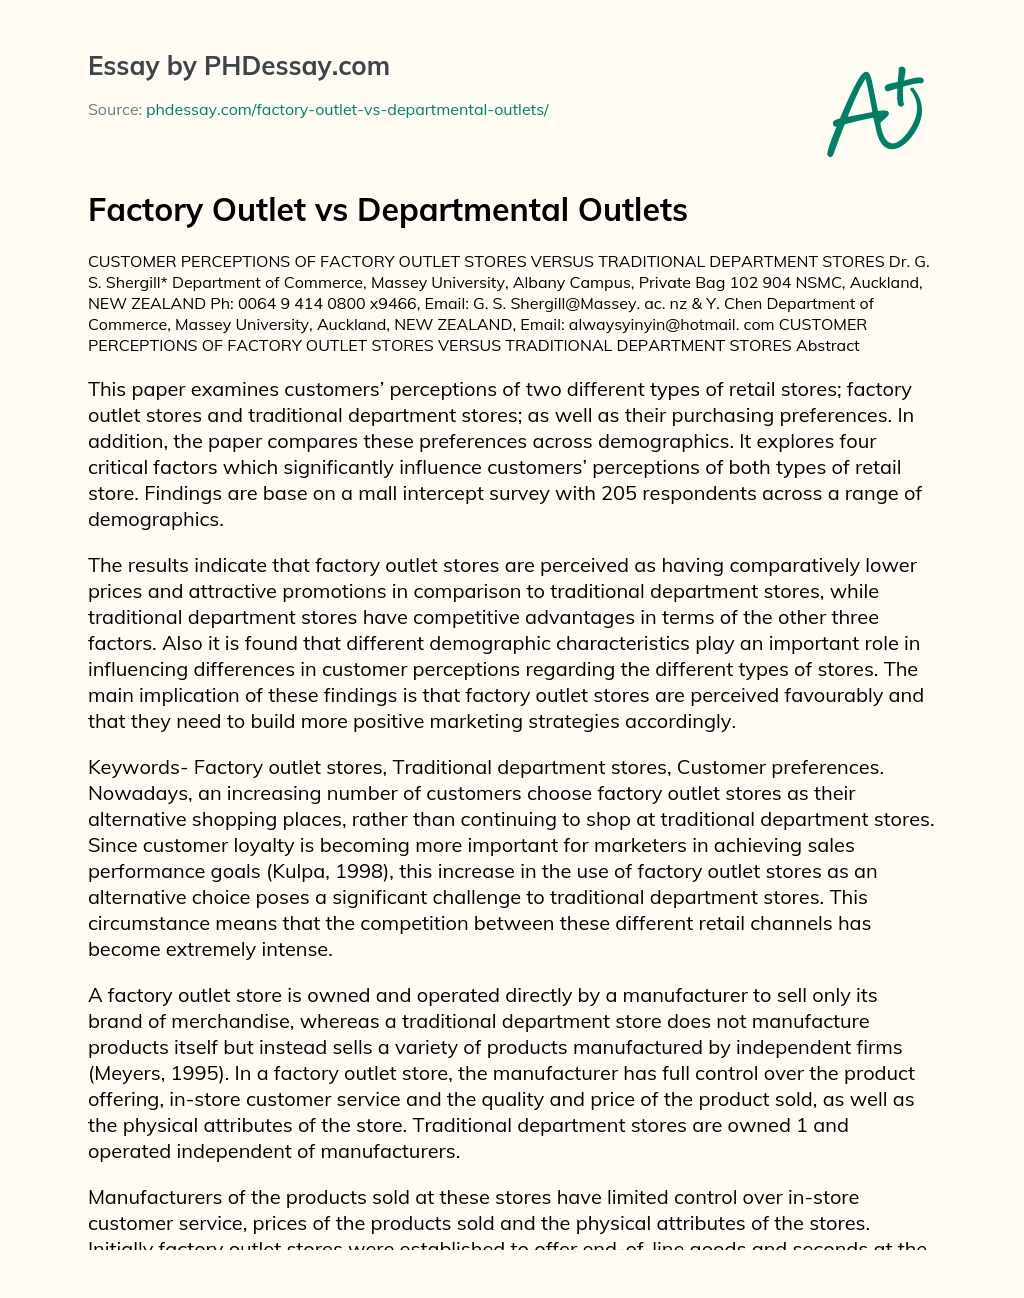 Factory Outlet vs Departmental Outlets essay